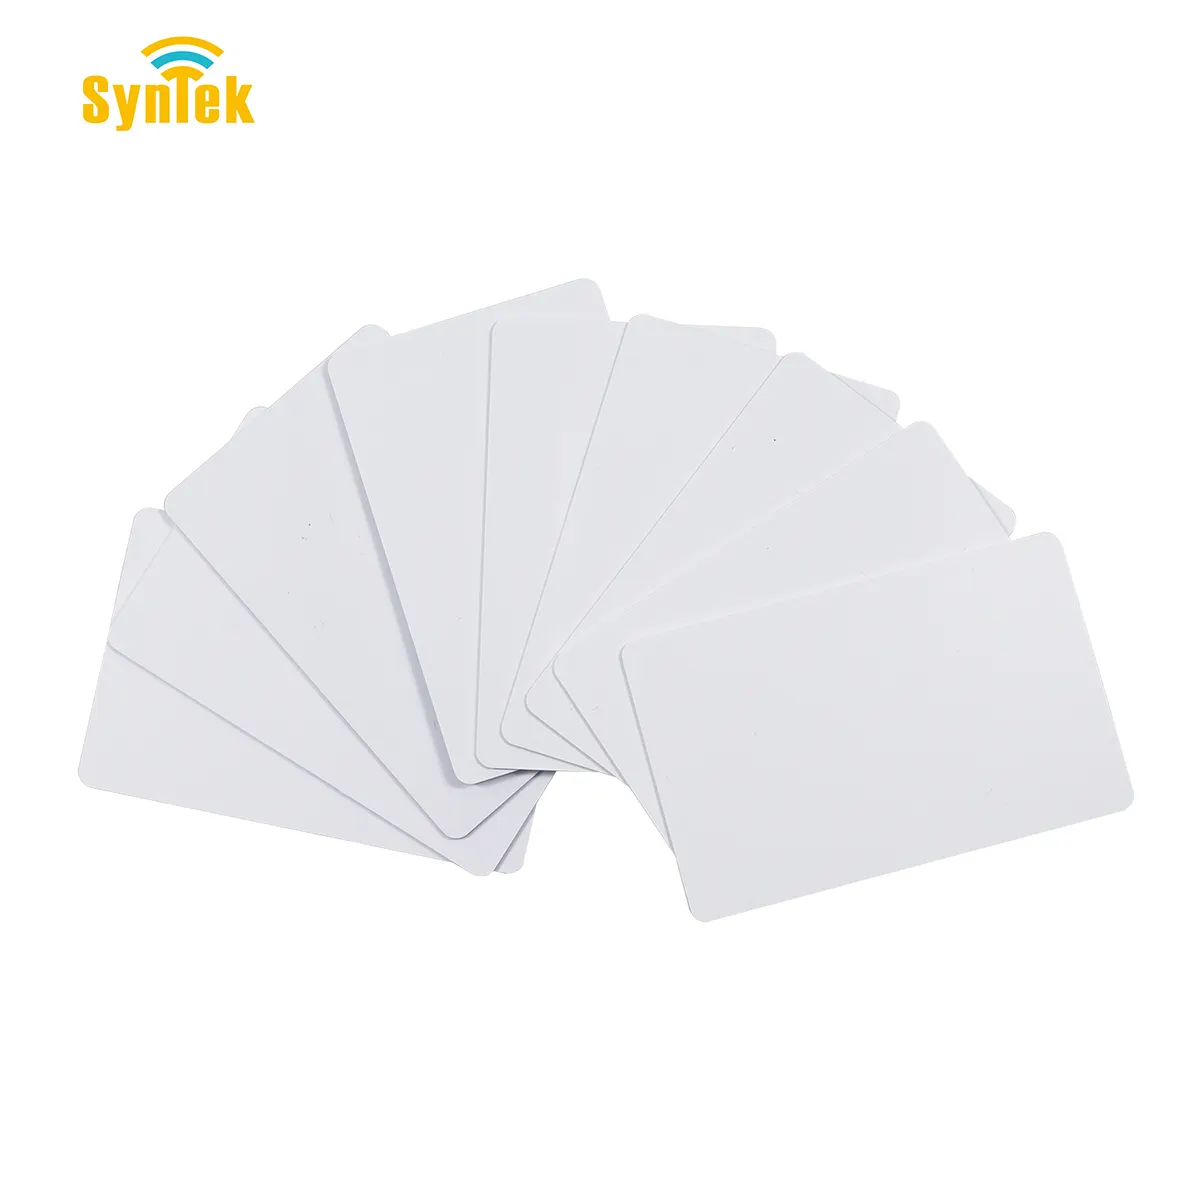 Kontaktlose Smartcard 125kHz T5577 leere PVC-RFID-ID-Karten